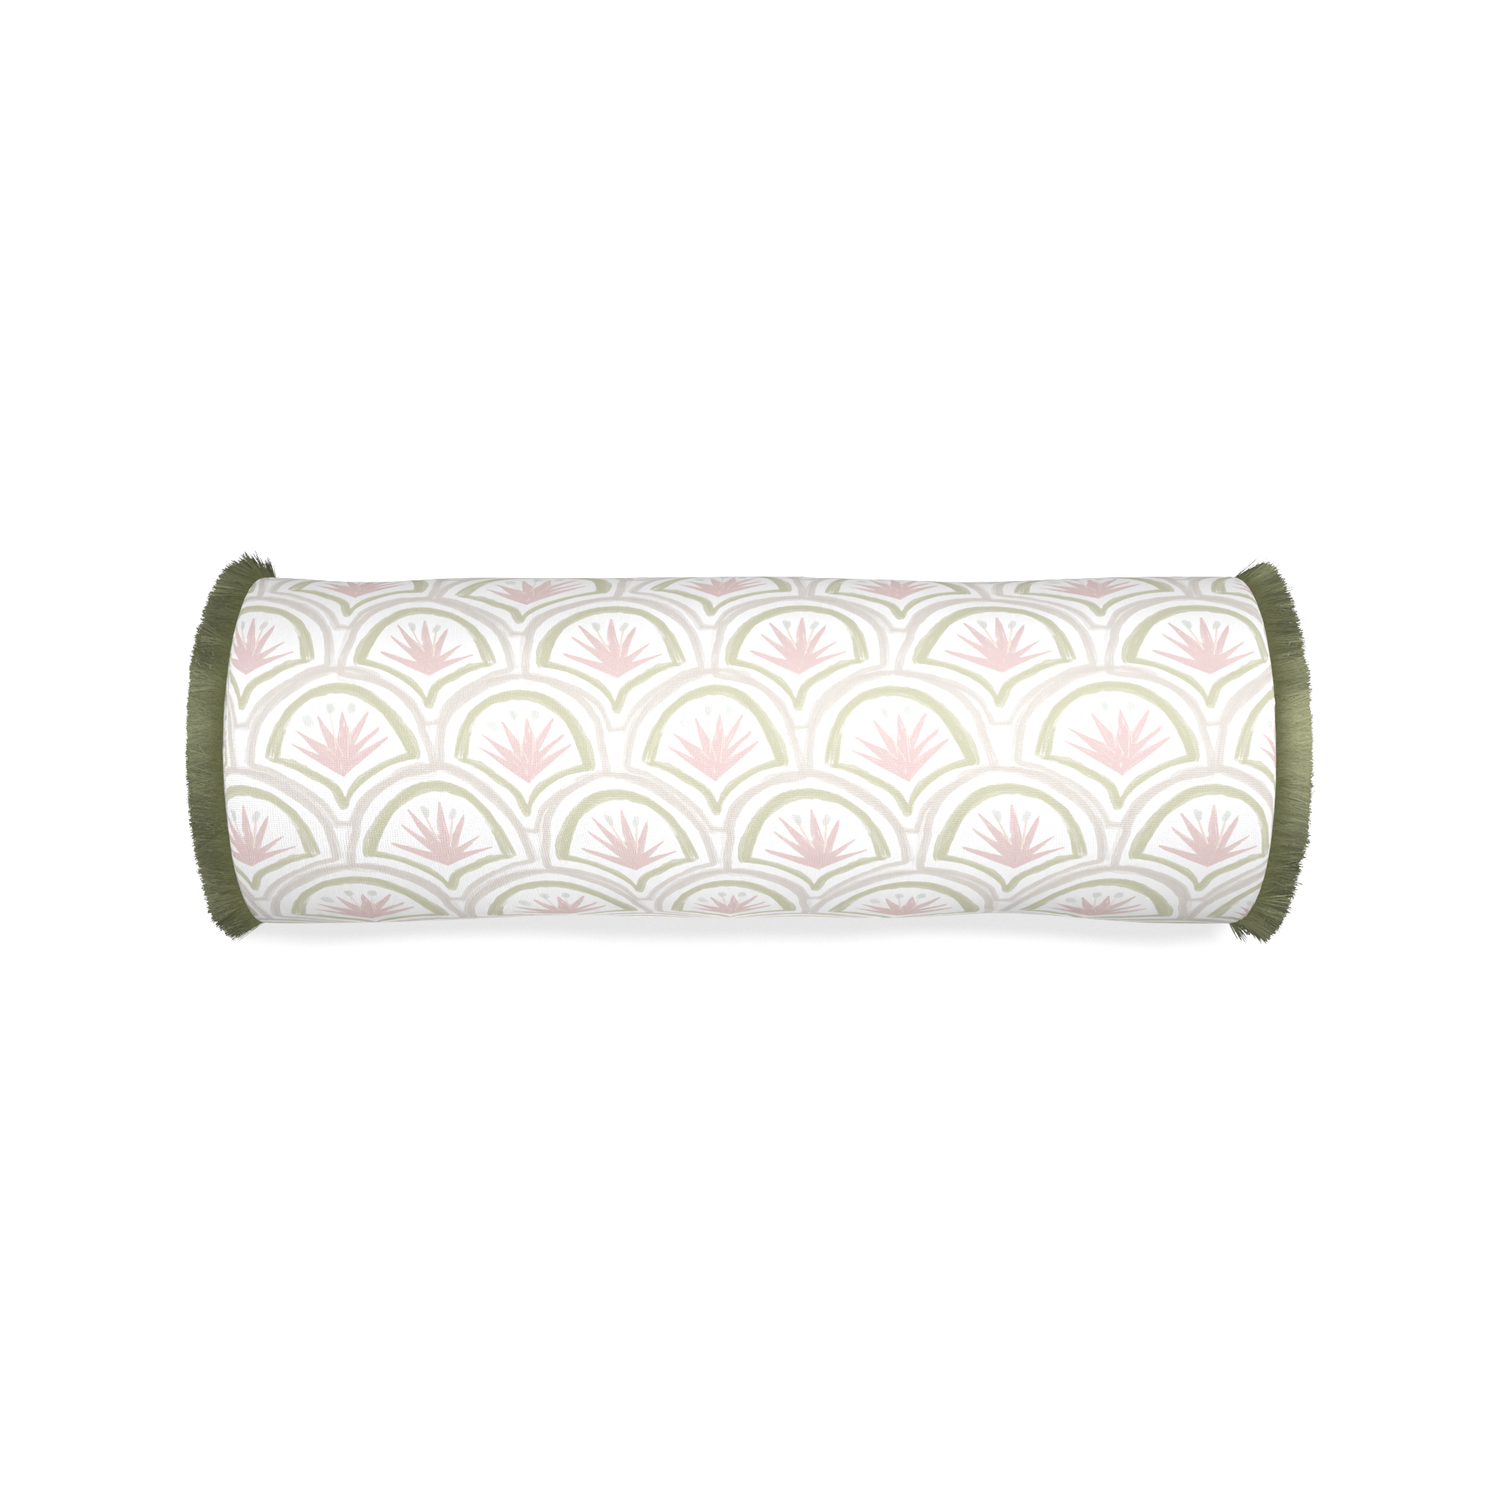 Bolster thatcher rose custom pillow with sage fringe on white background